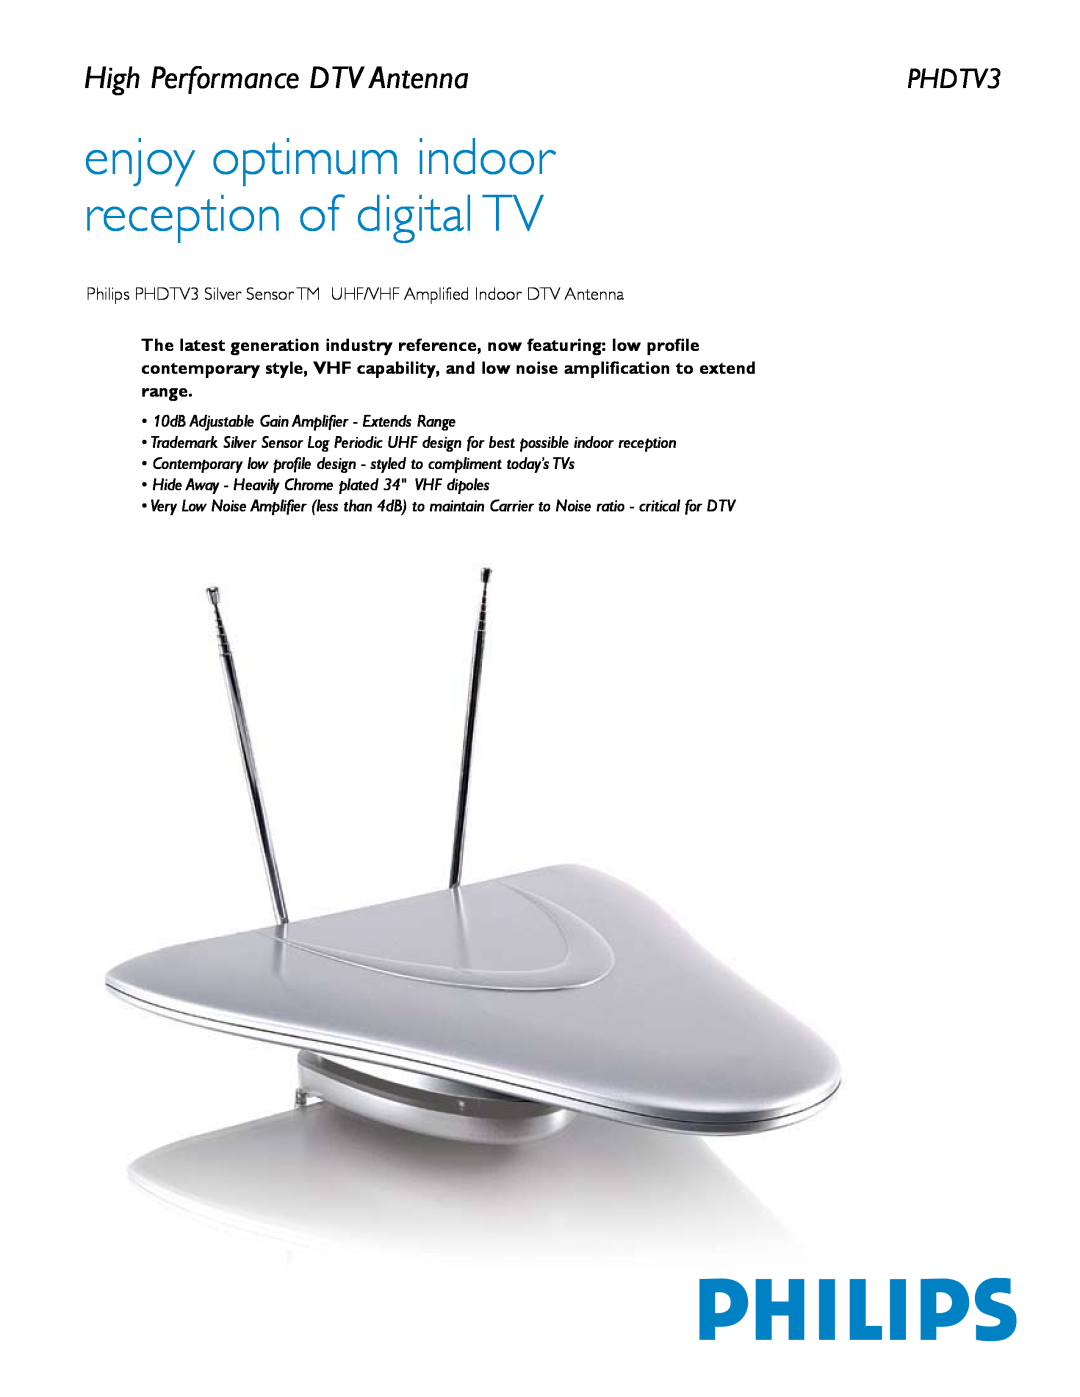 Philips PHDTV3 manual High Performance DTV Antenna, enjoy optimum indoor reception of digital TV 